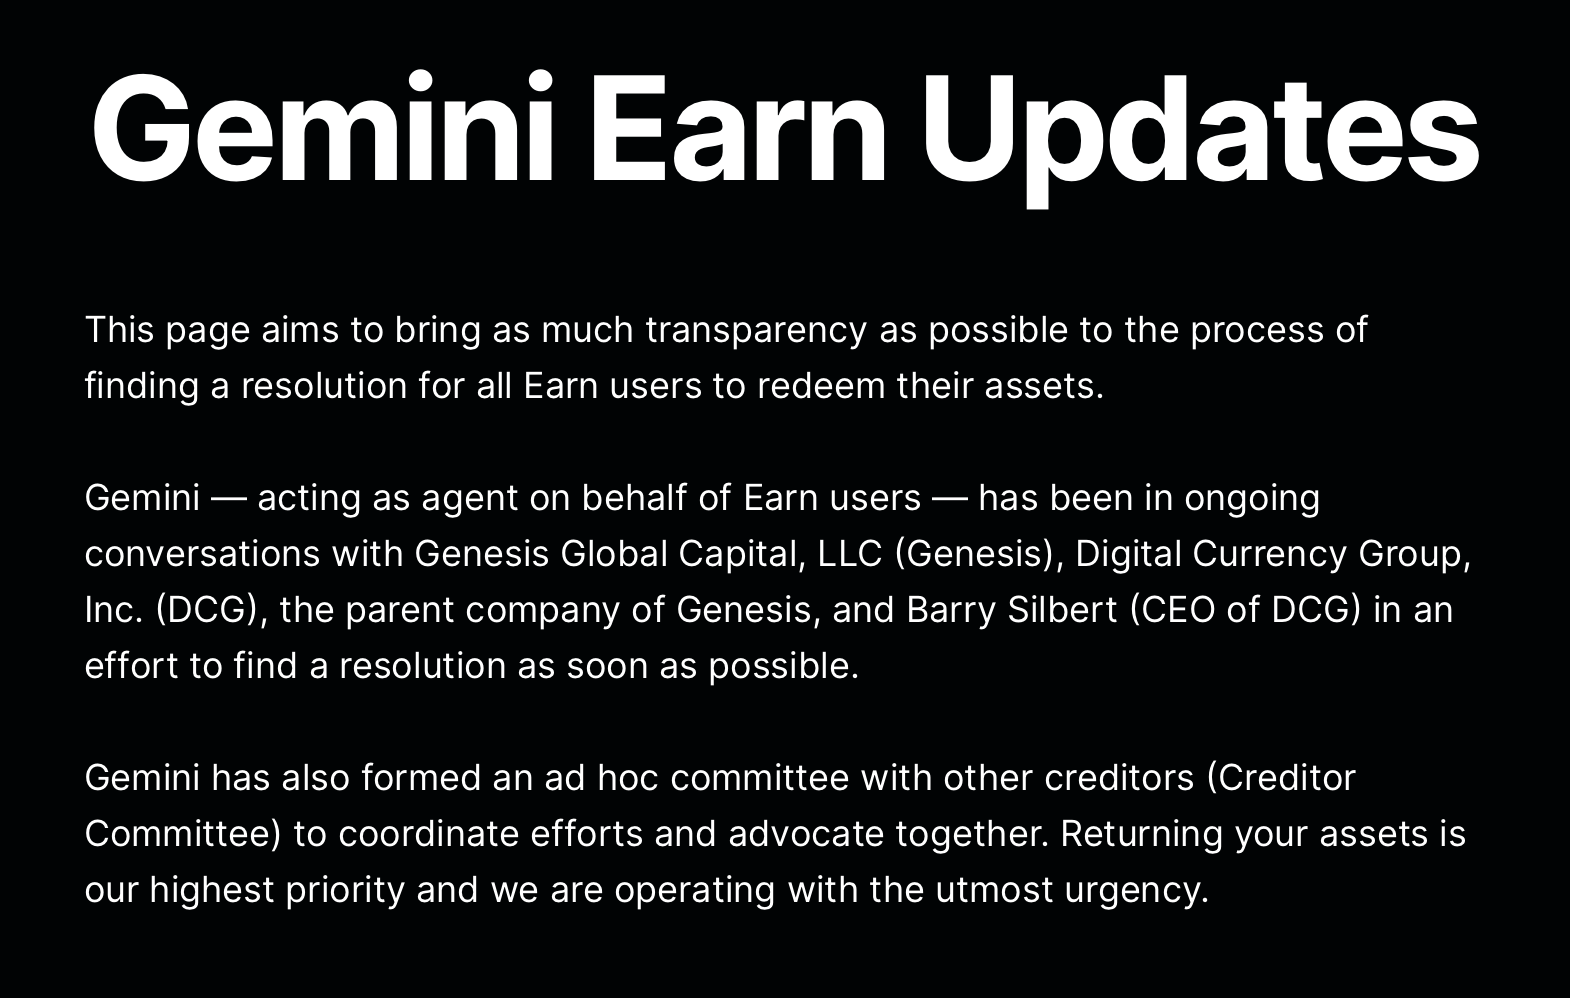 Gemini update for Earn users